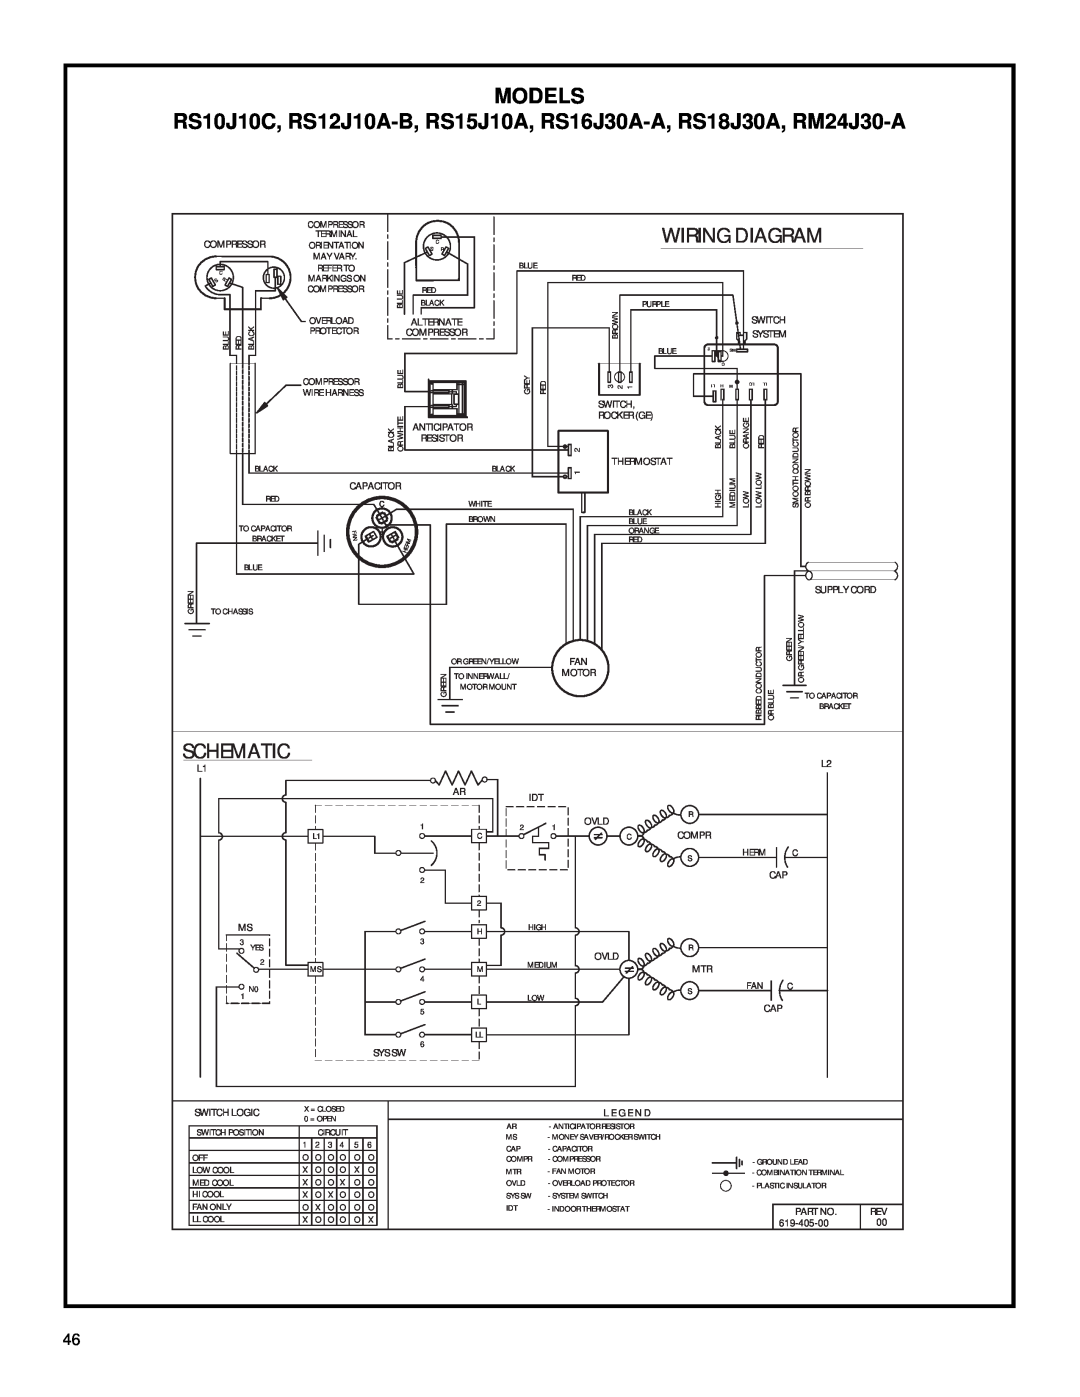 Friedrich 2003 service manual Wiring Diagram, Schematic, Models 